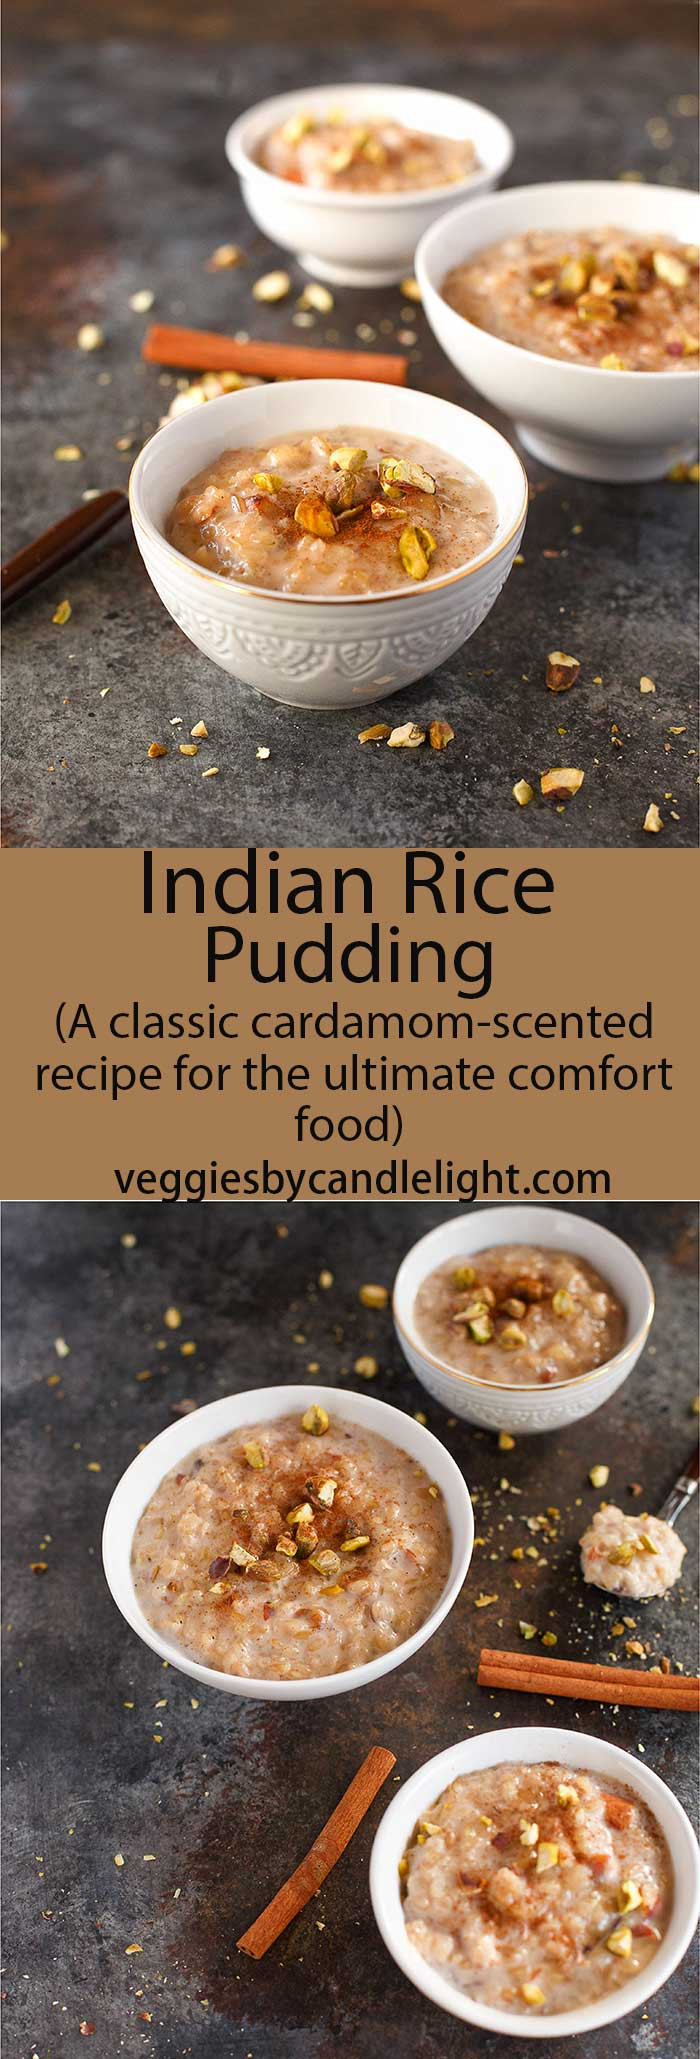 Indian Rice Dessert
 Indian Rice Pudding